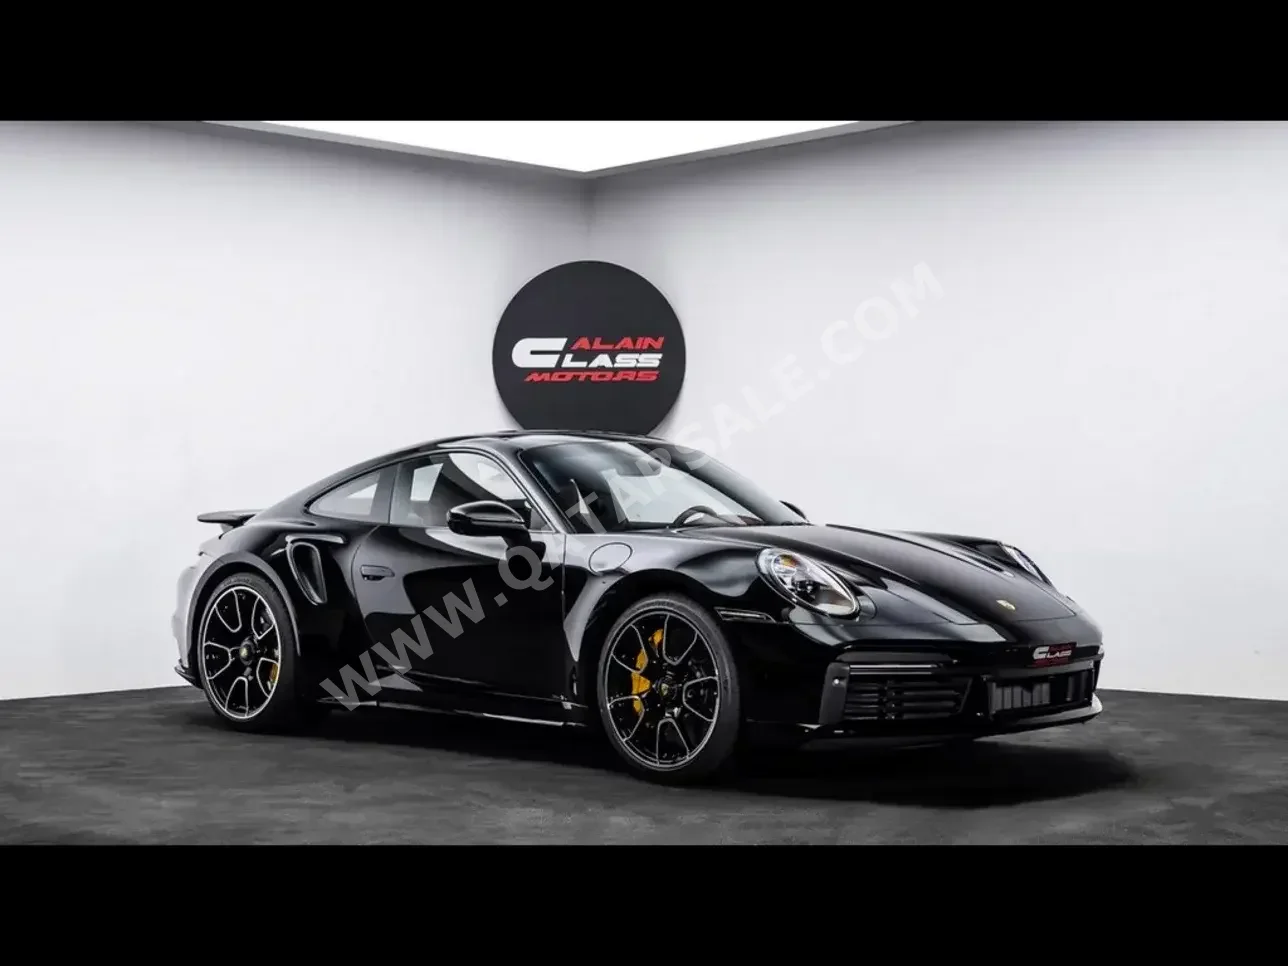 Porsche  911  Turbo S  2024  Automatic  0 Km  6 Cylinder  Rear Wheel Drive (RWD)  Coupe / Sport  Black  With Warranty